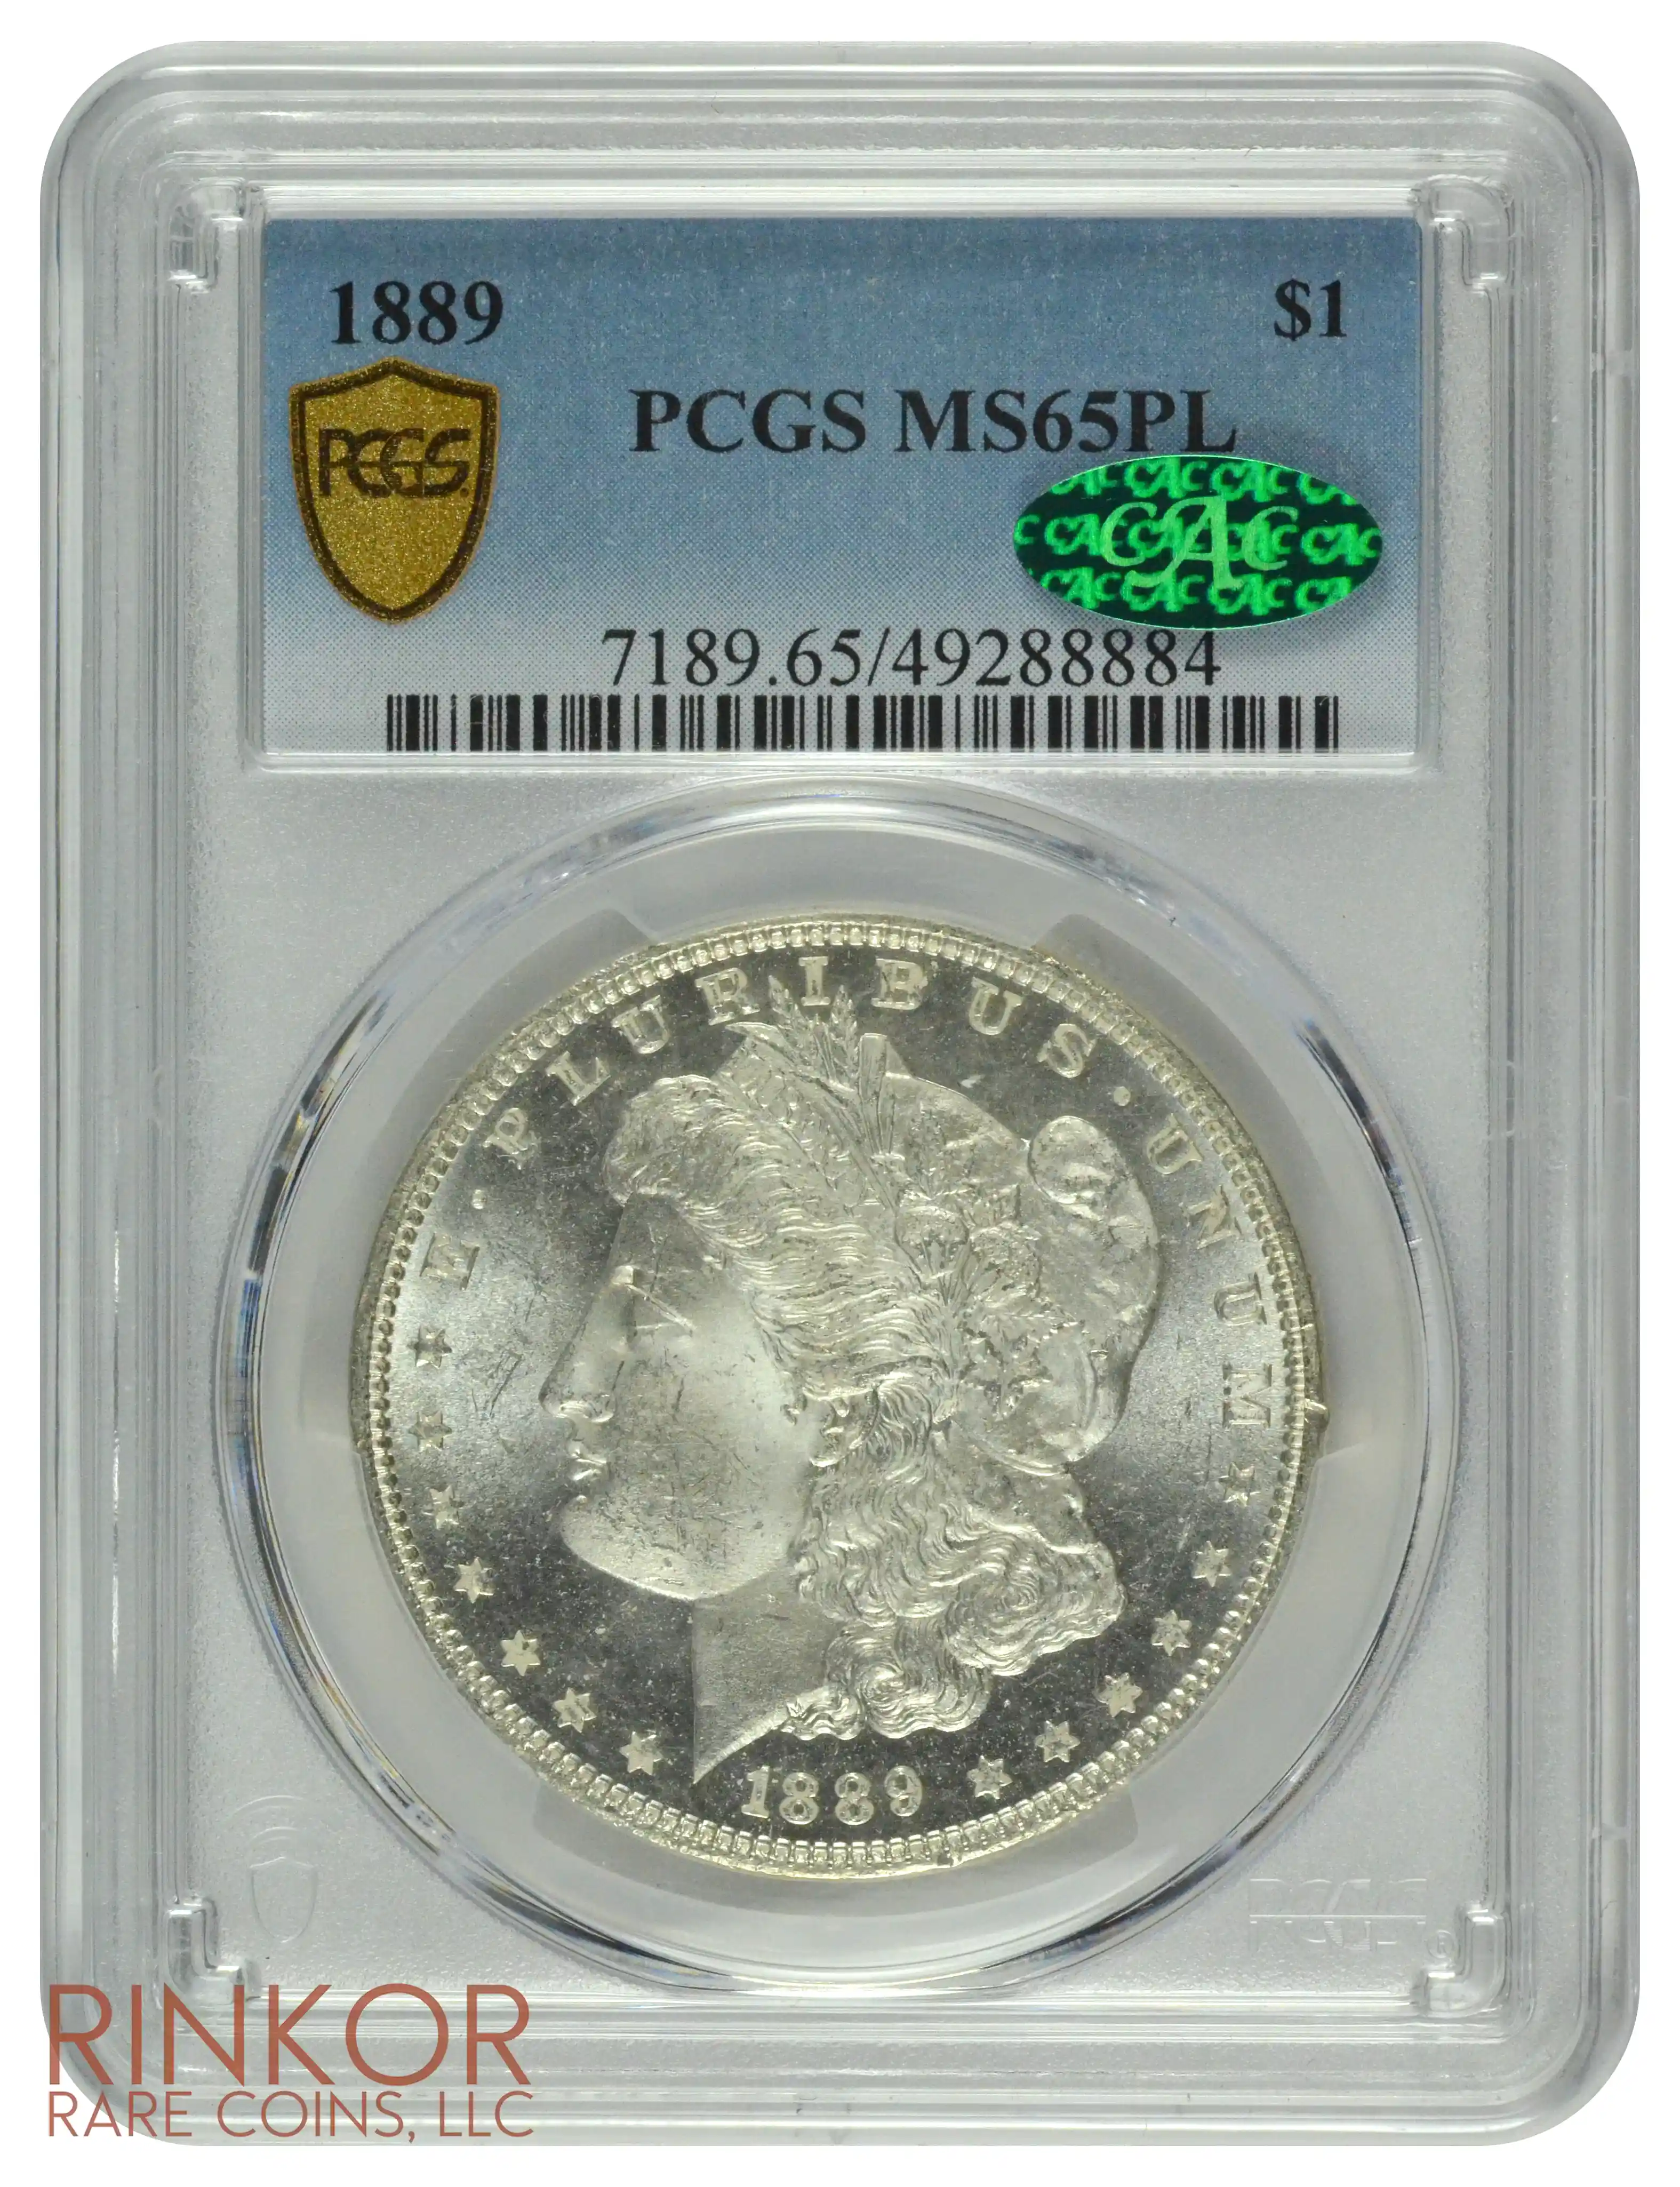 1889 $1 PCGS MS 65 PL CAC